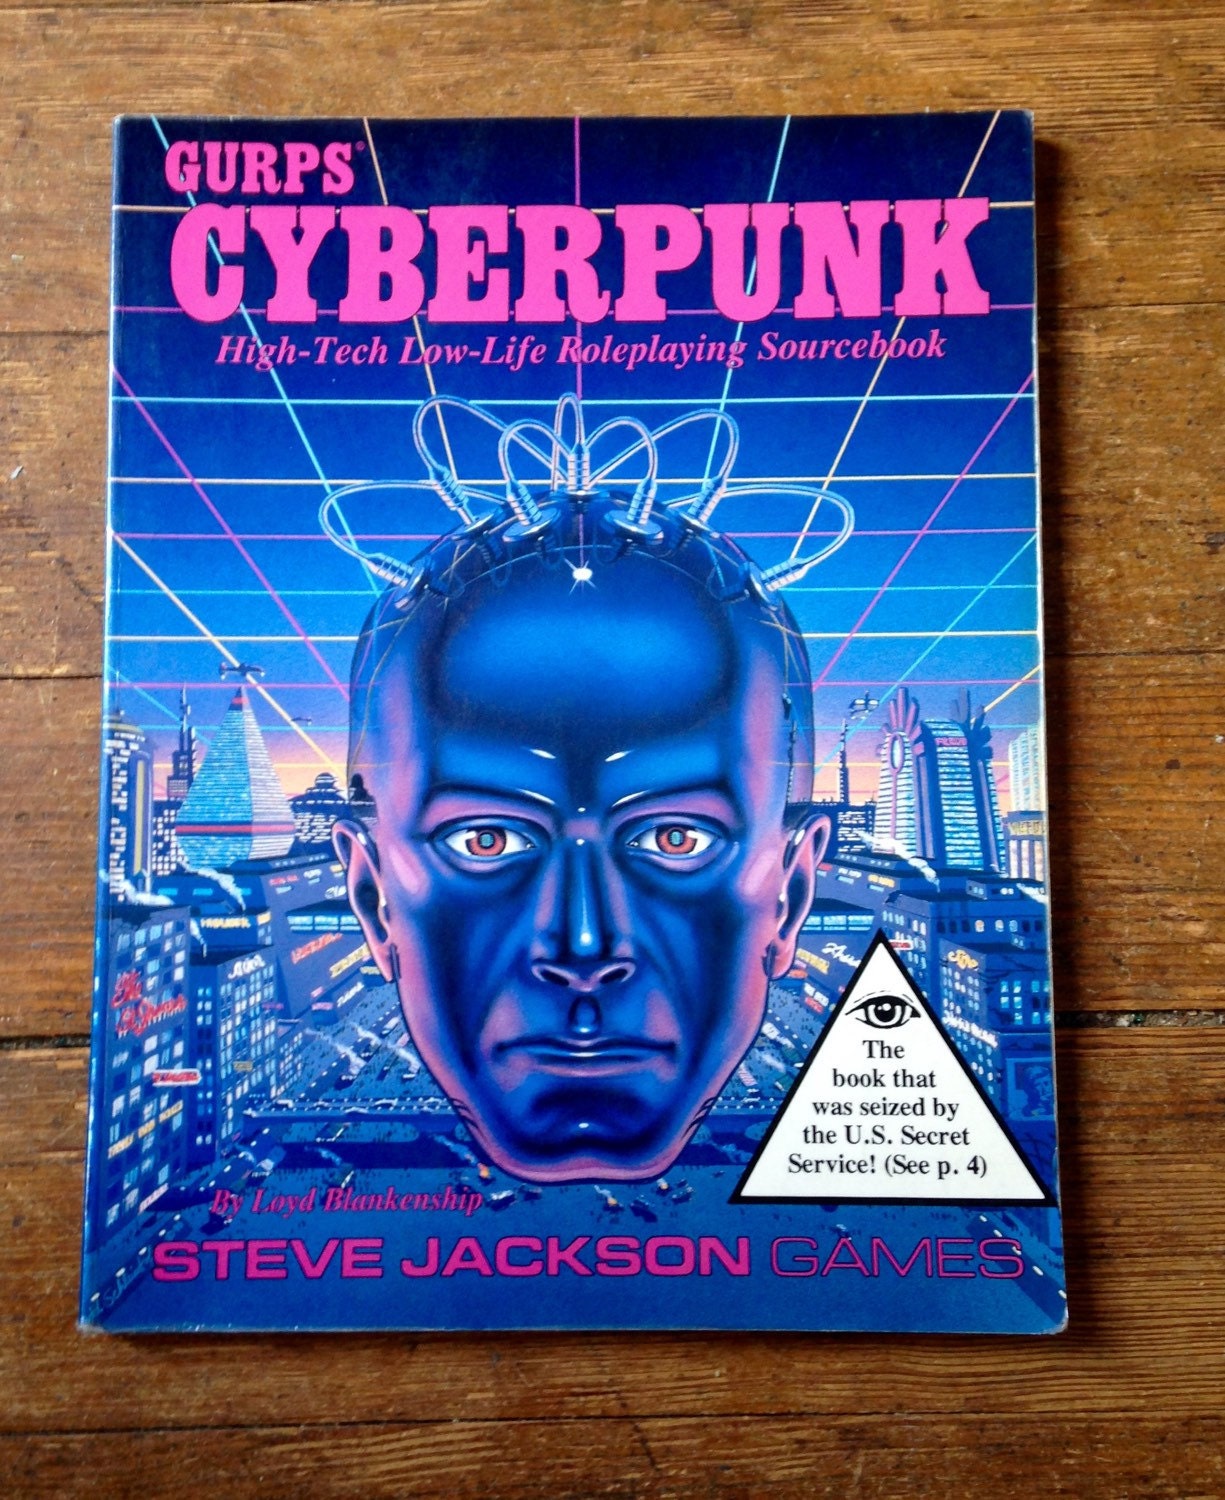 Gurps cyberpunk уильям гибсон книга фото 1